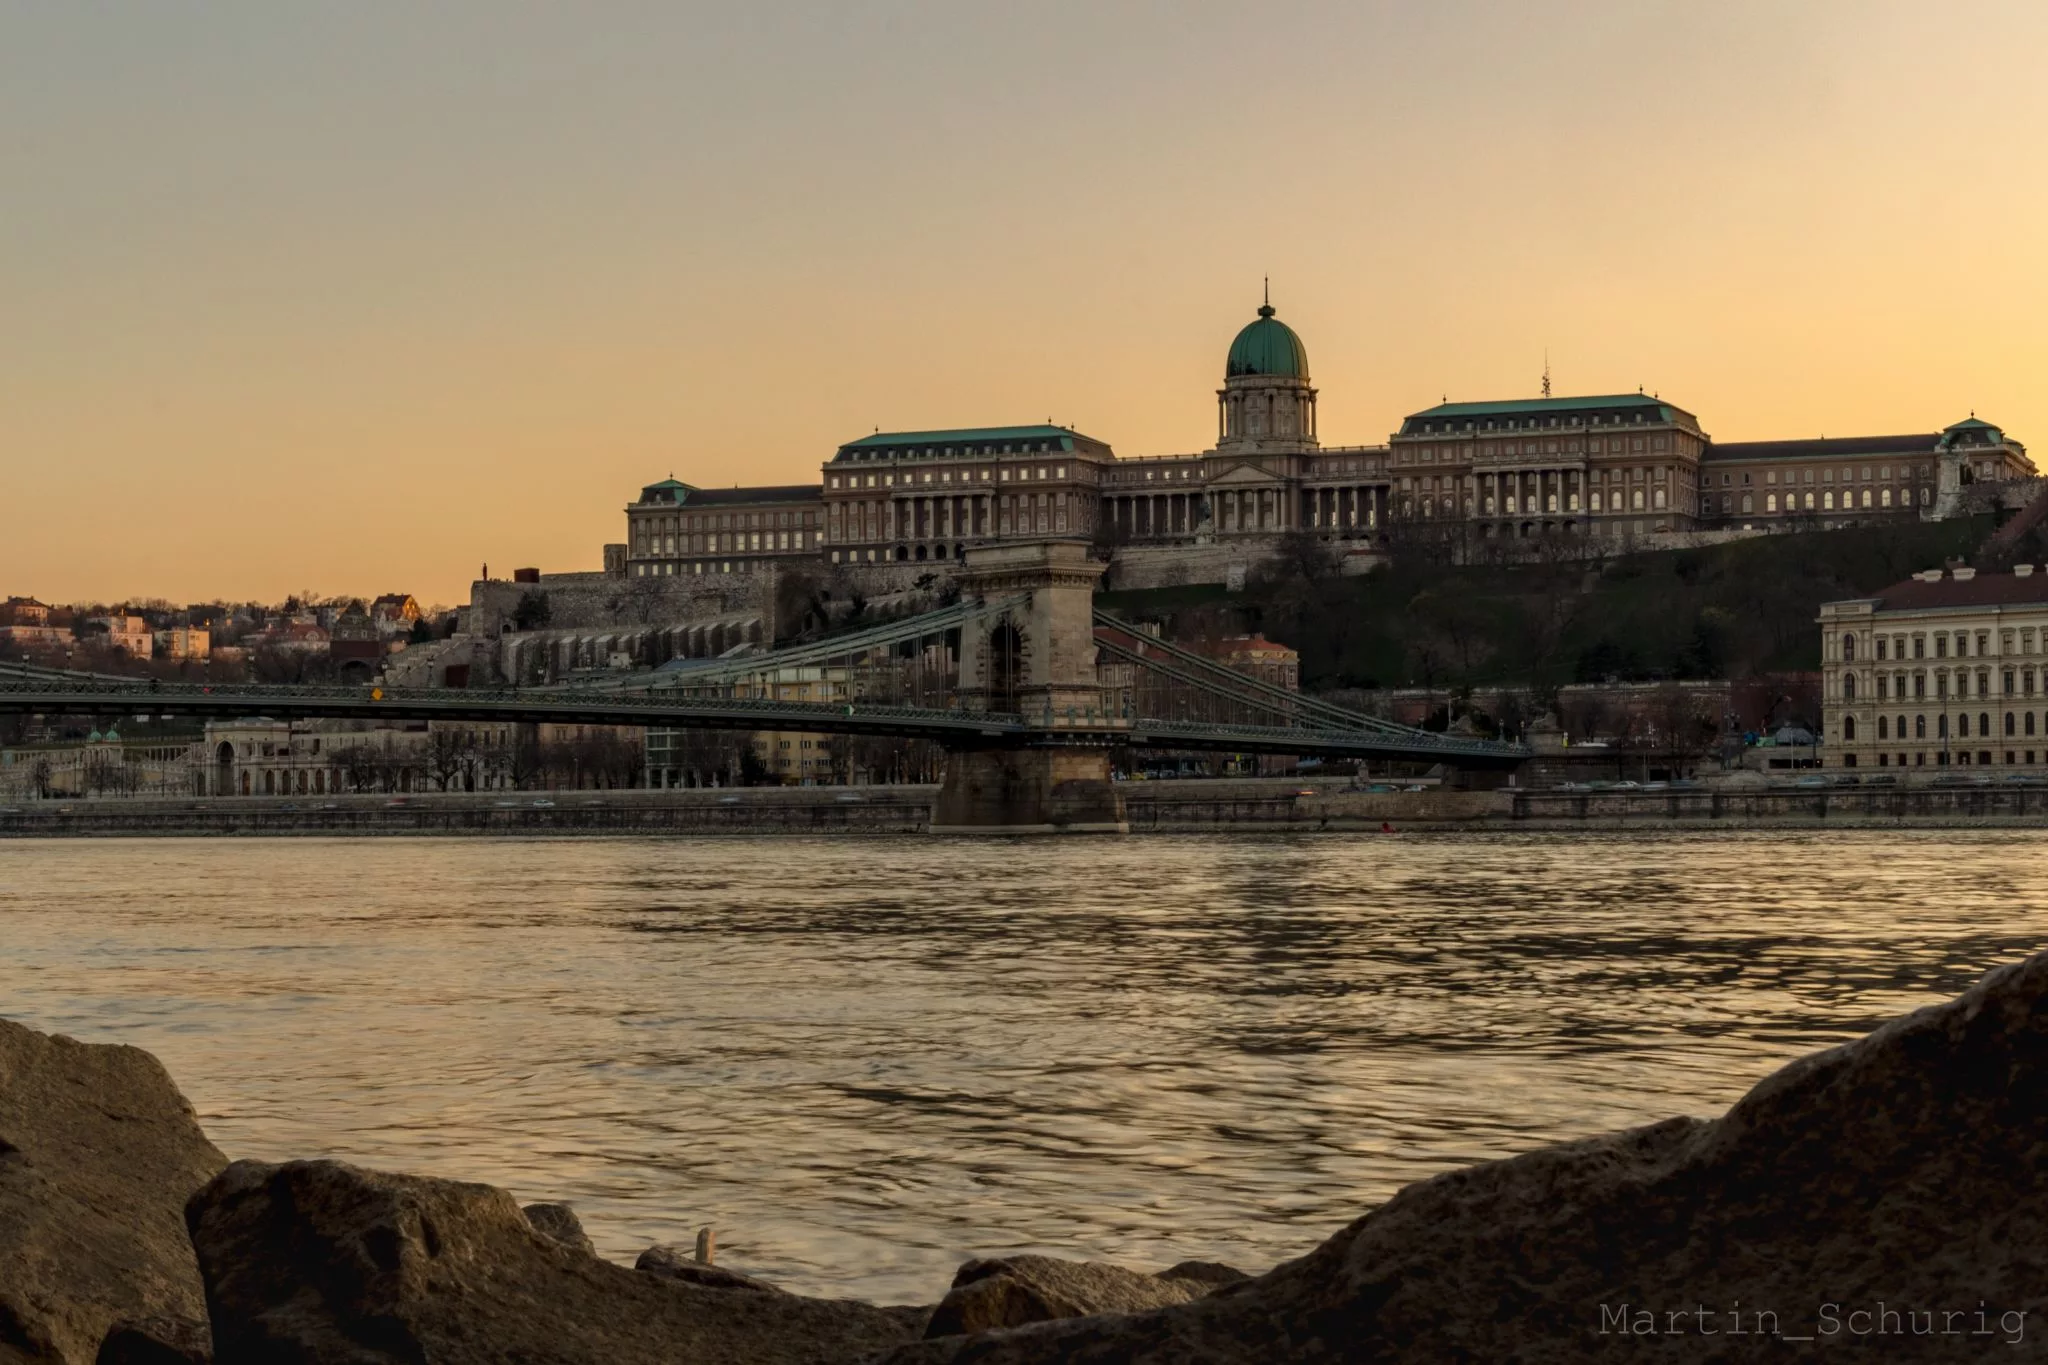 Buda Castle and Chain Bridge, Hungary